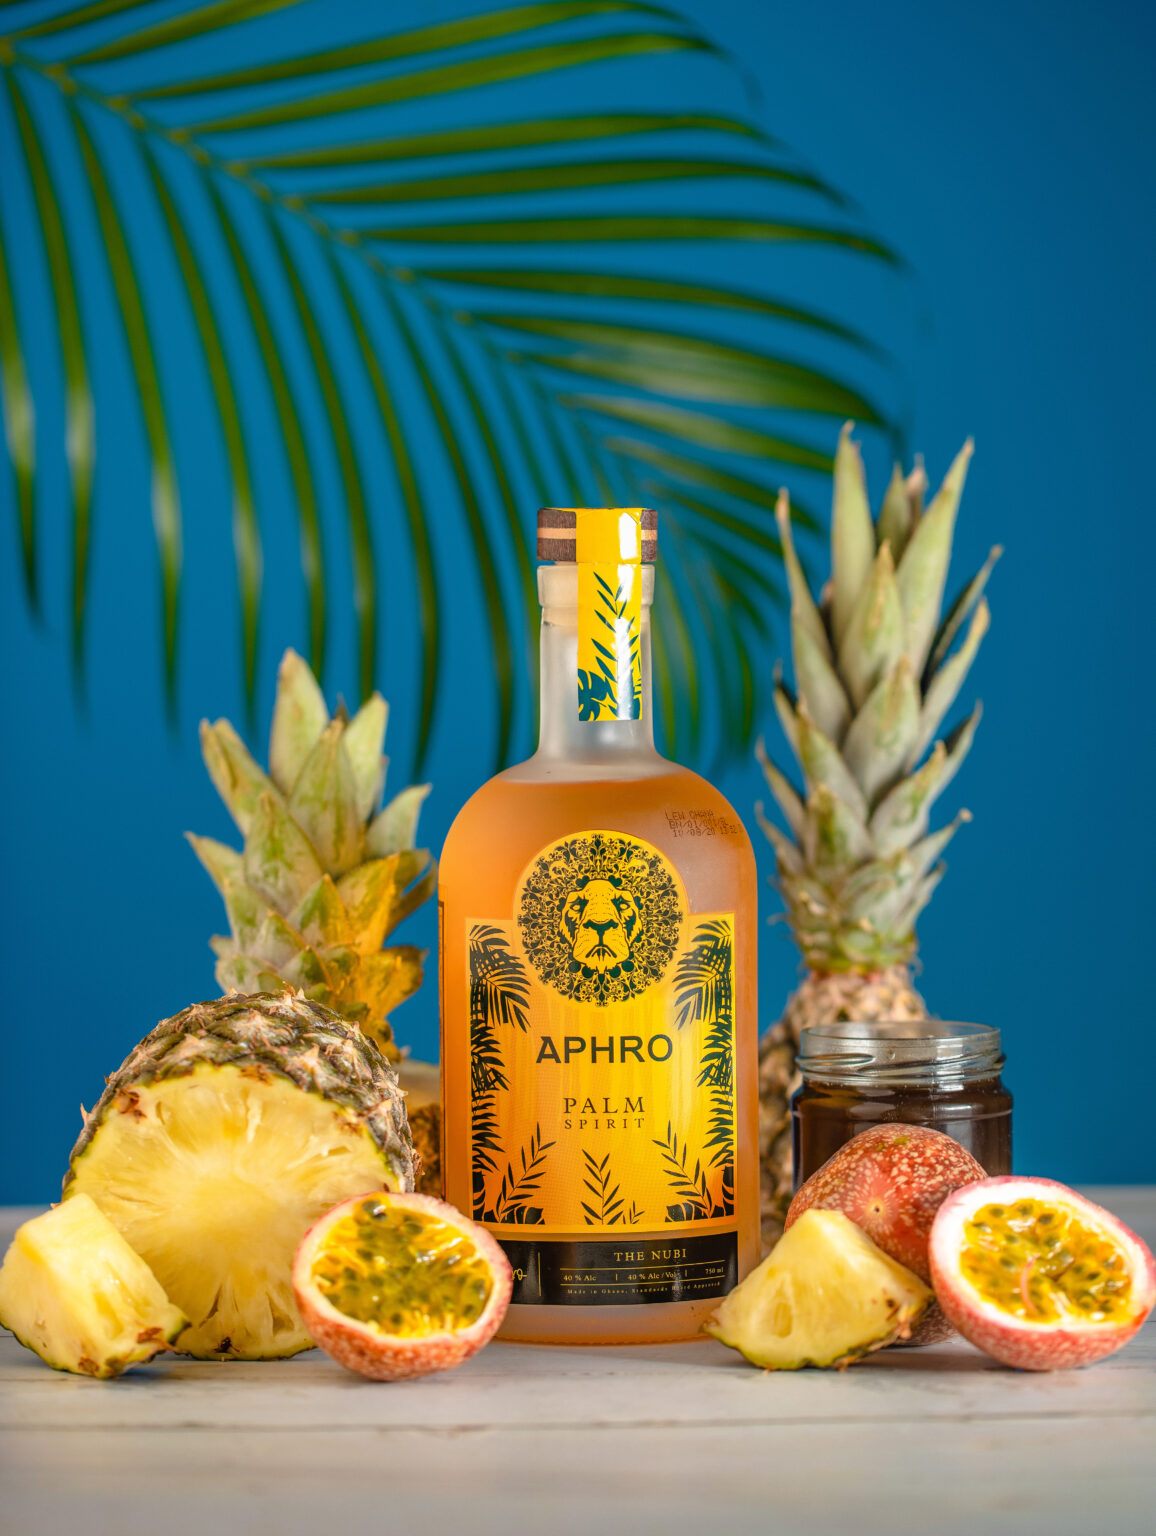 Aphro palm spirit - the nubi